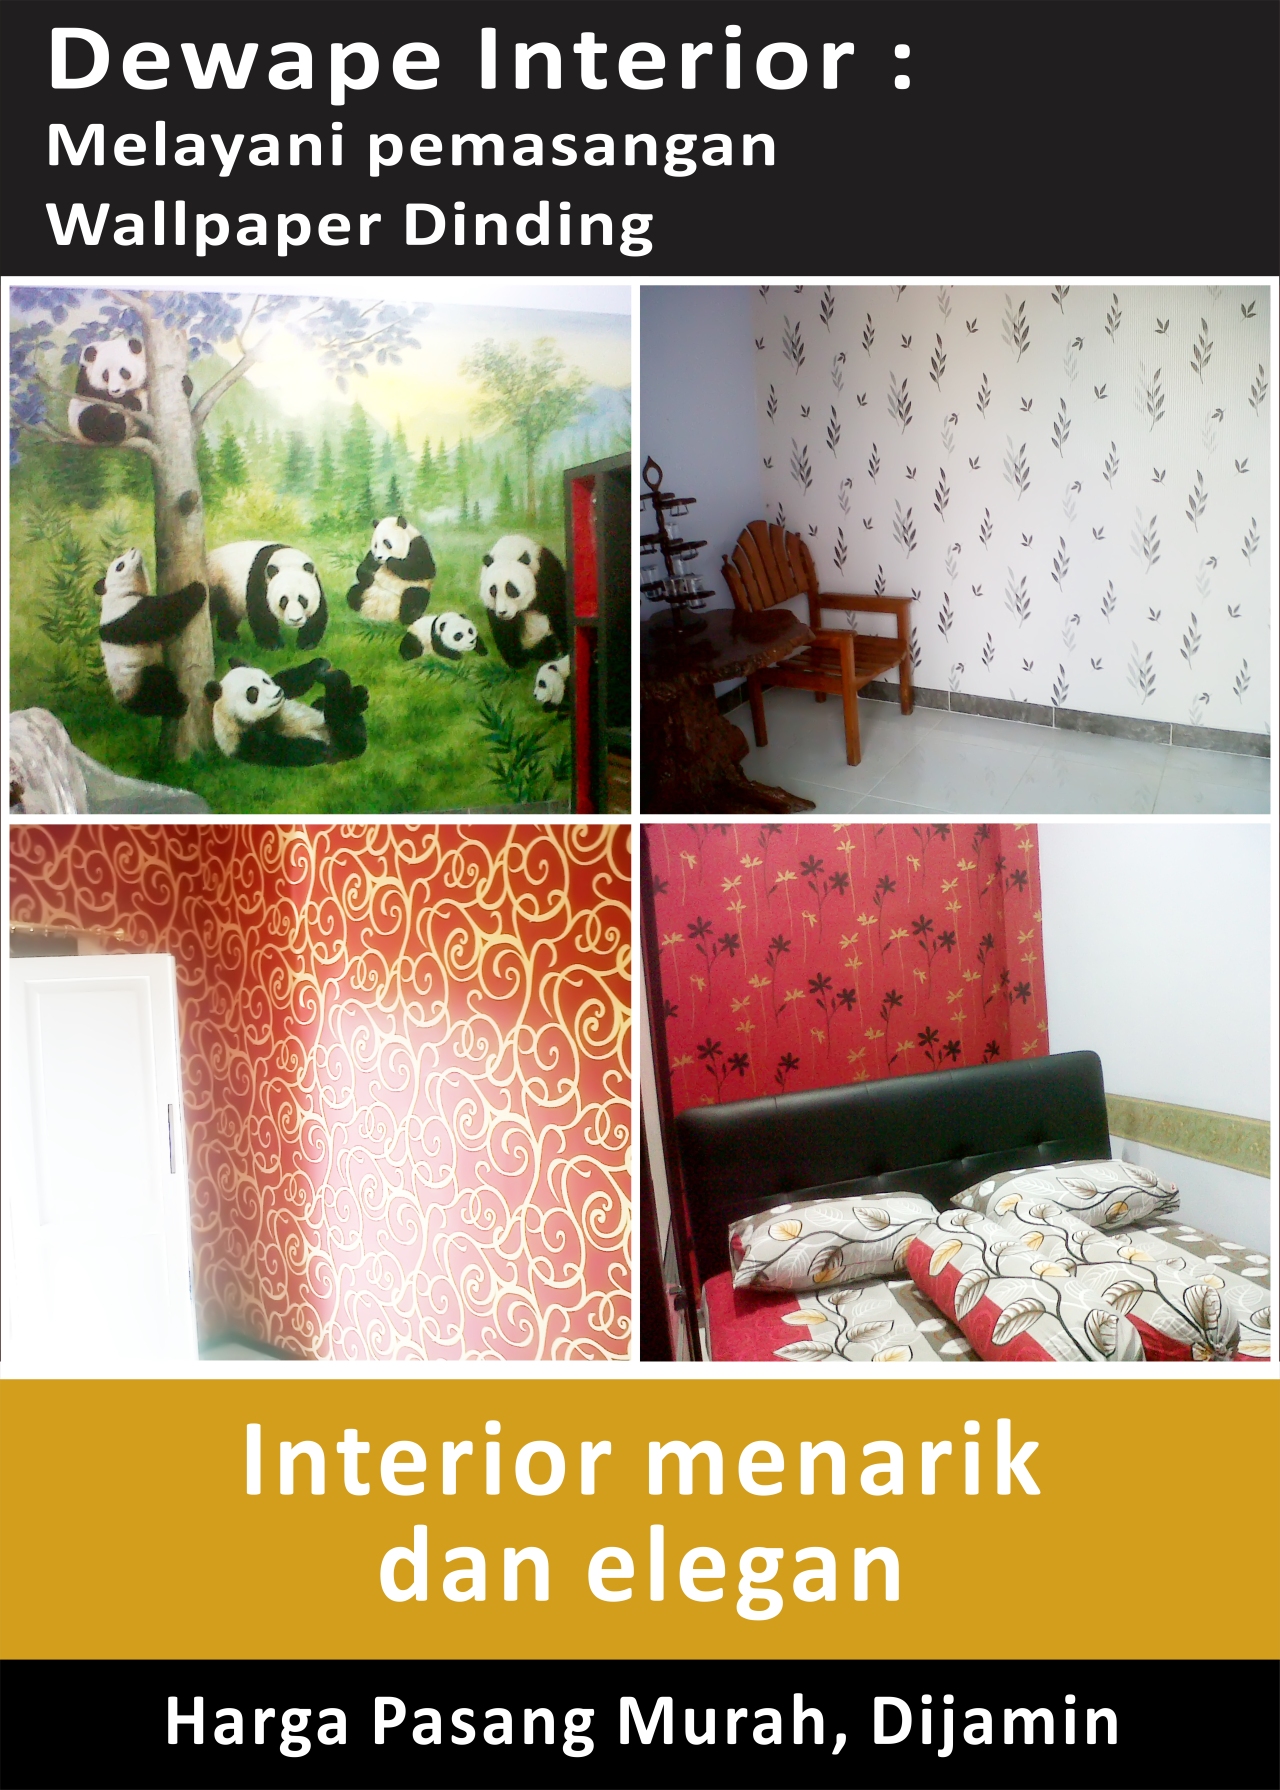 Wallpaper Dinding Mojokerto Toko Grosir Wallpaper Malang